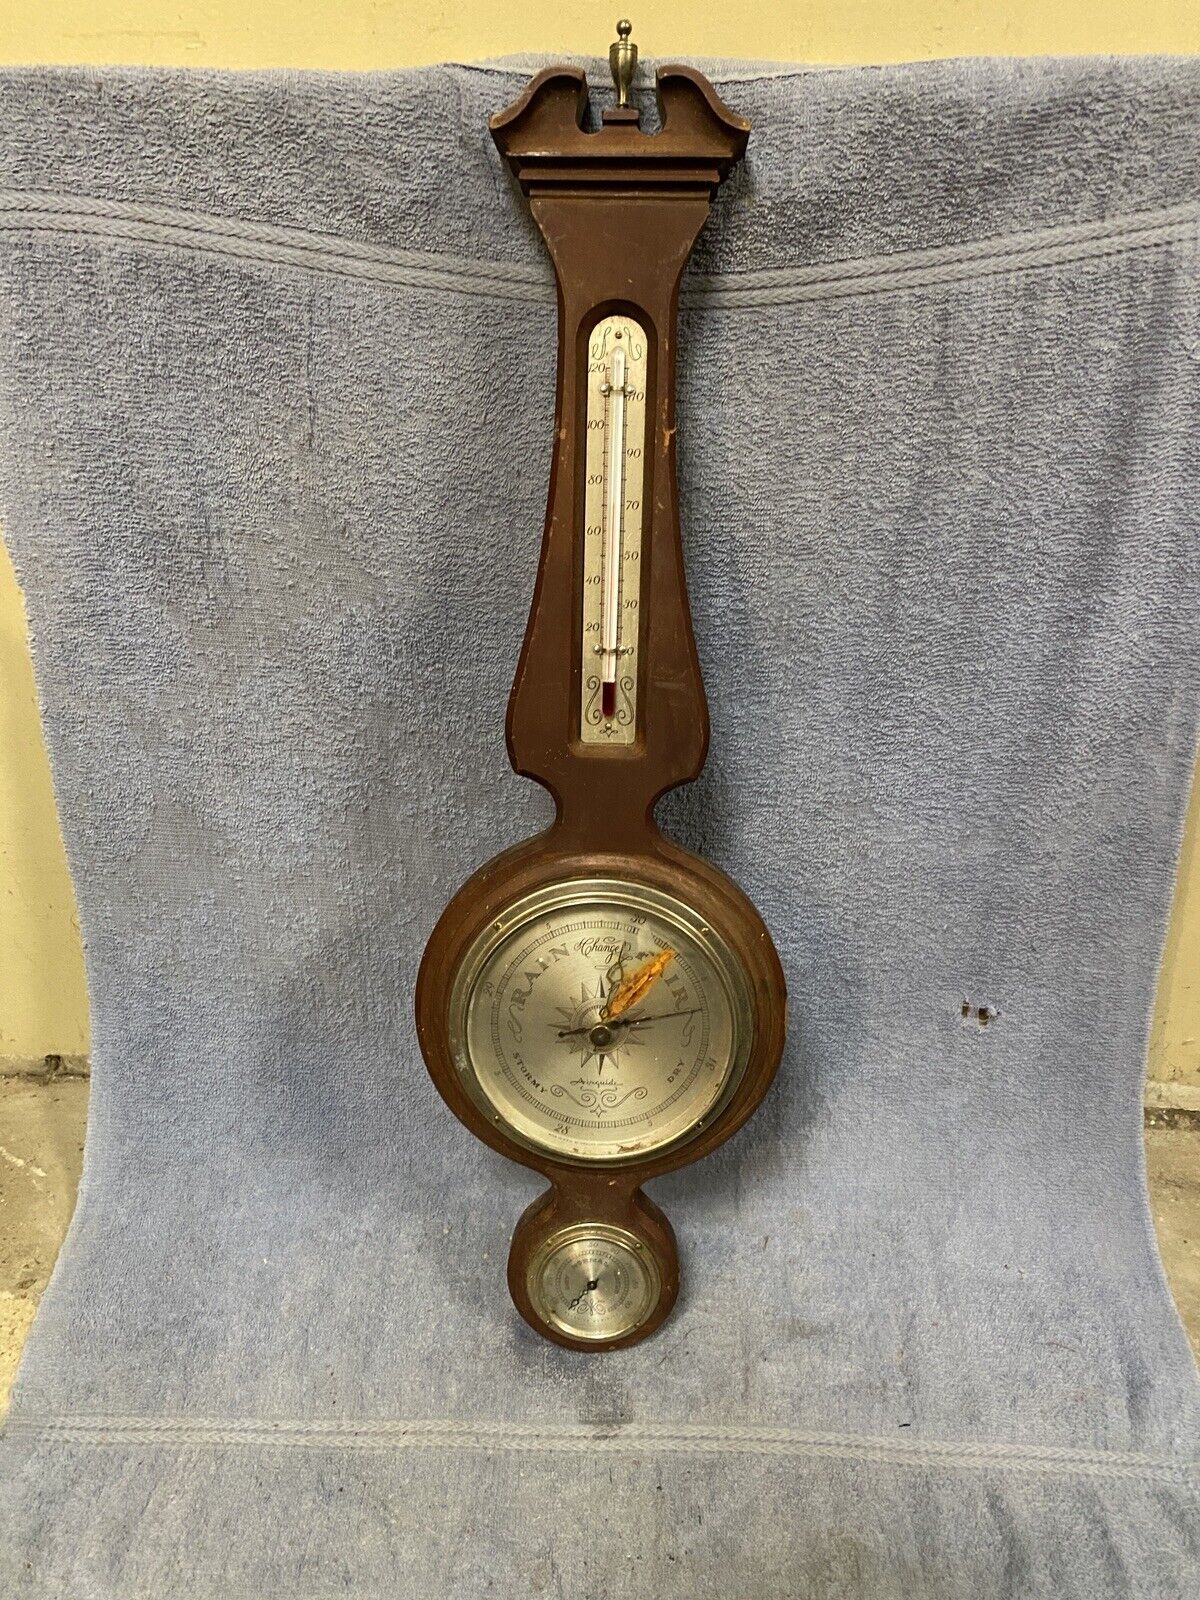 Vintage Midcentury Modern Airguide Barometer Thermometer